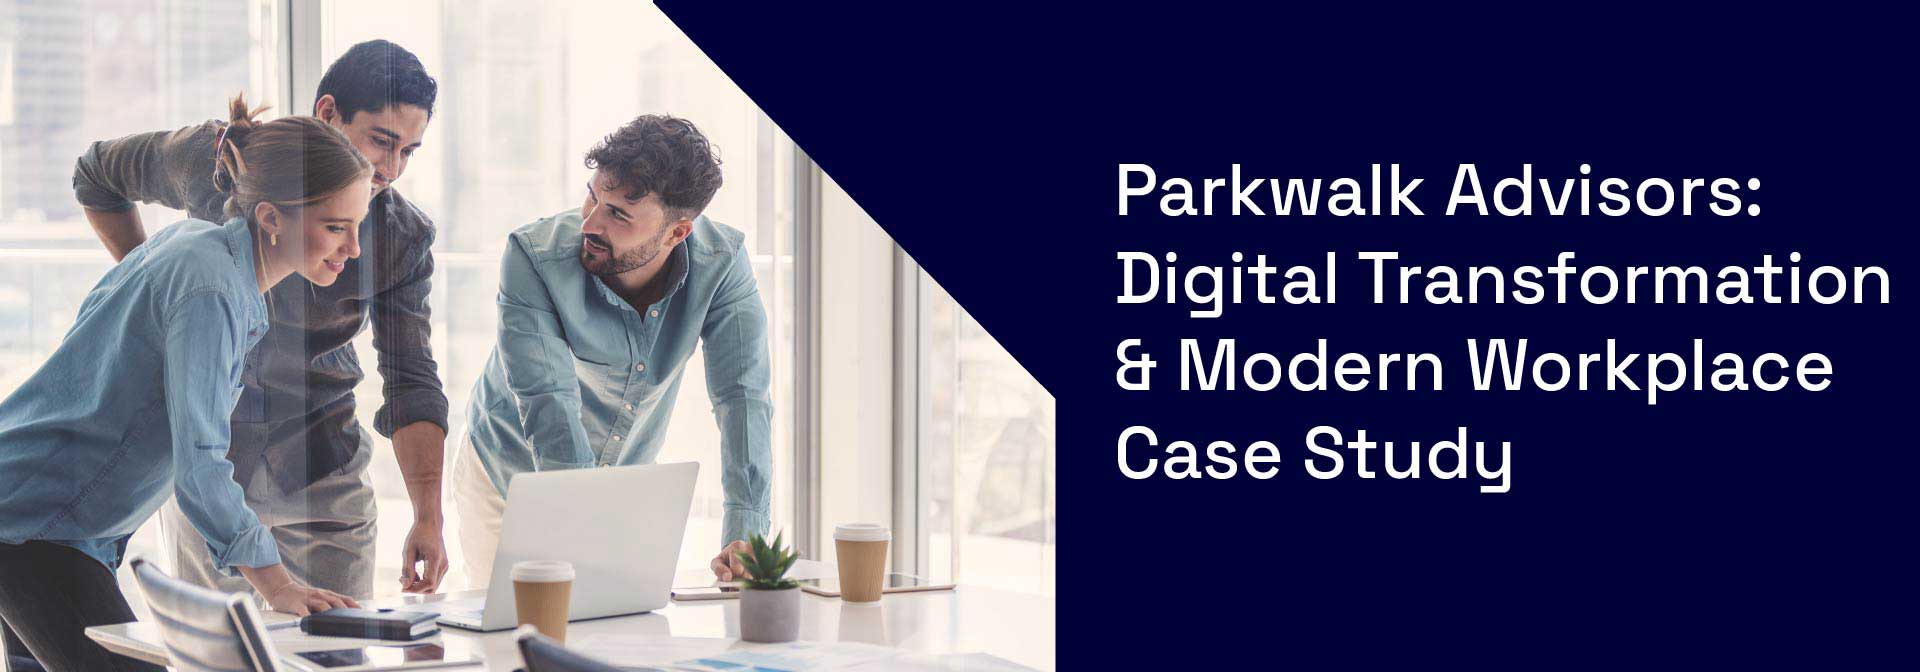 Parkwalk Advisors - Digital Transformation & Modern Workplace Case Study